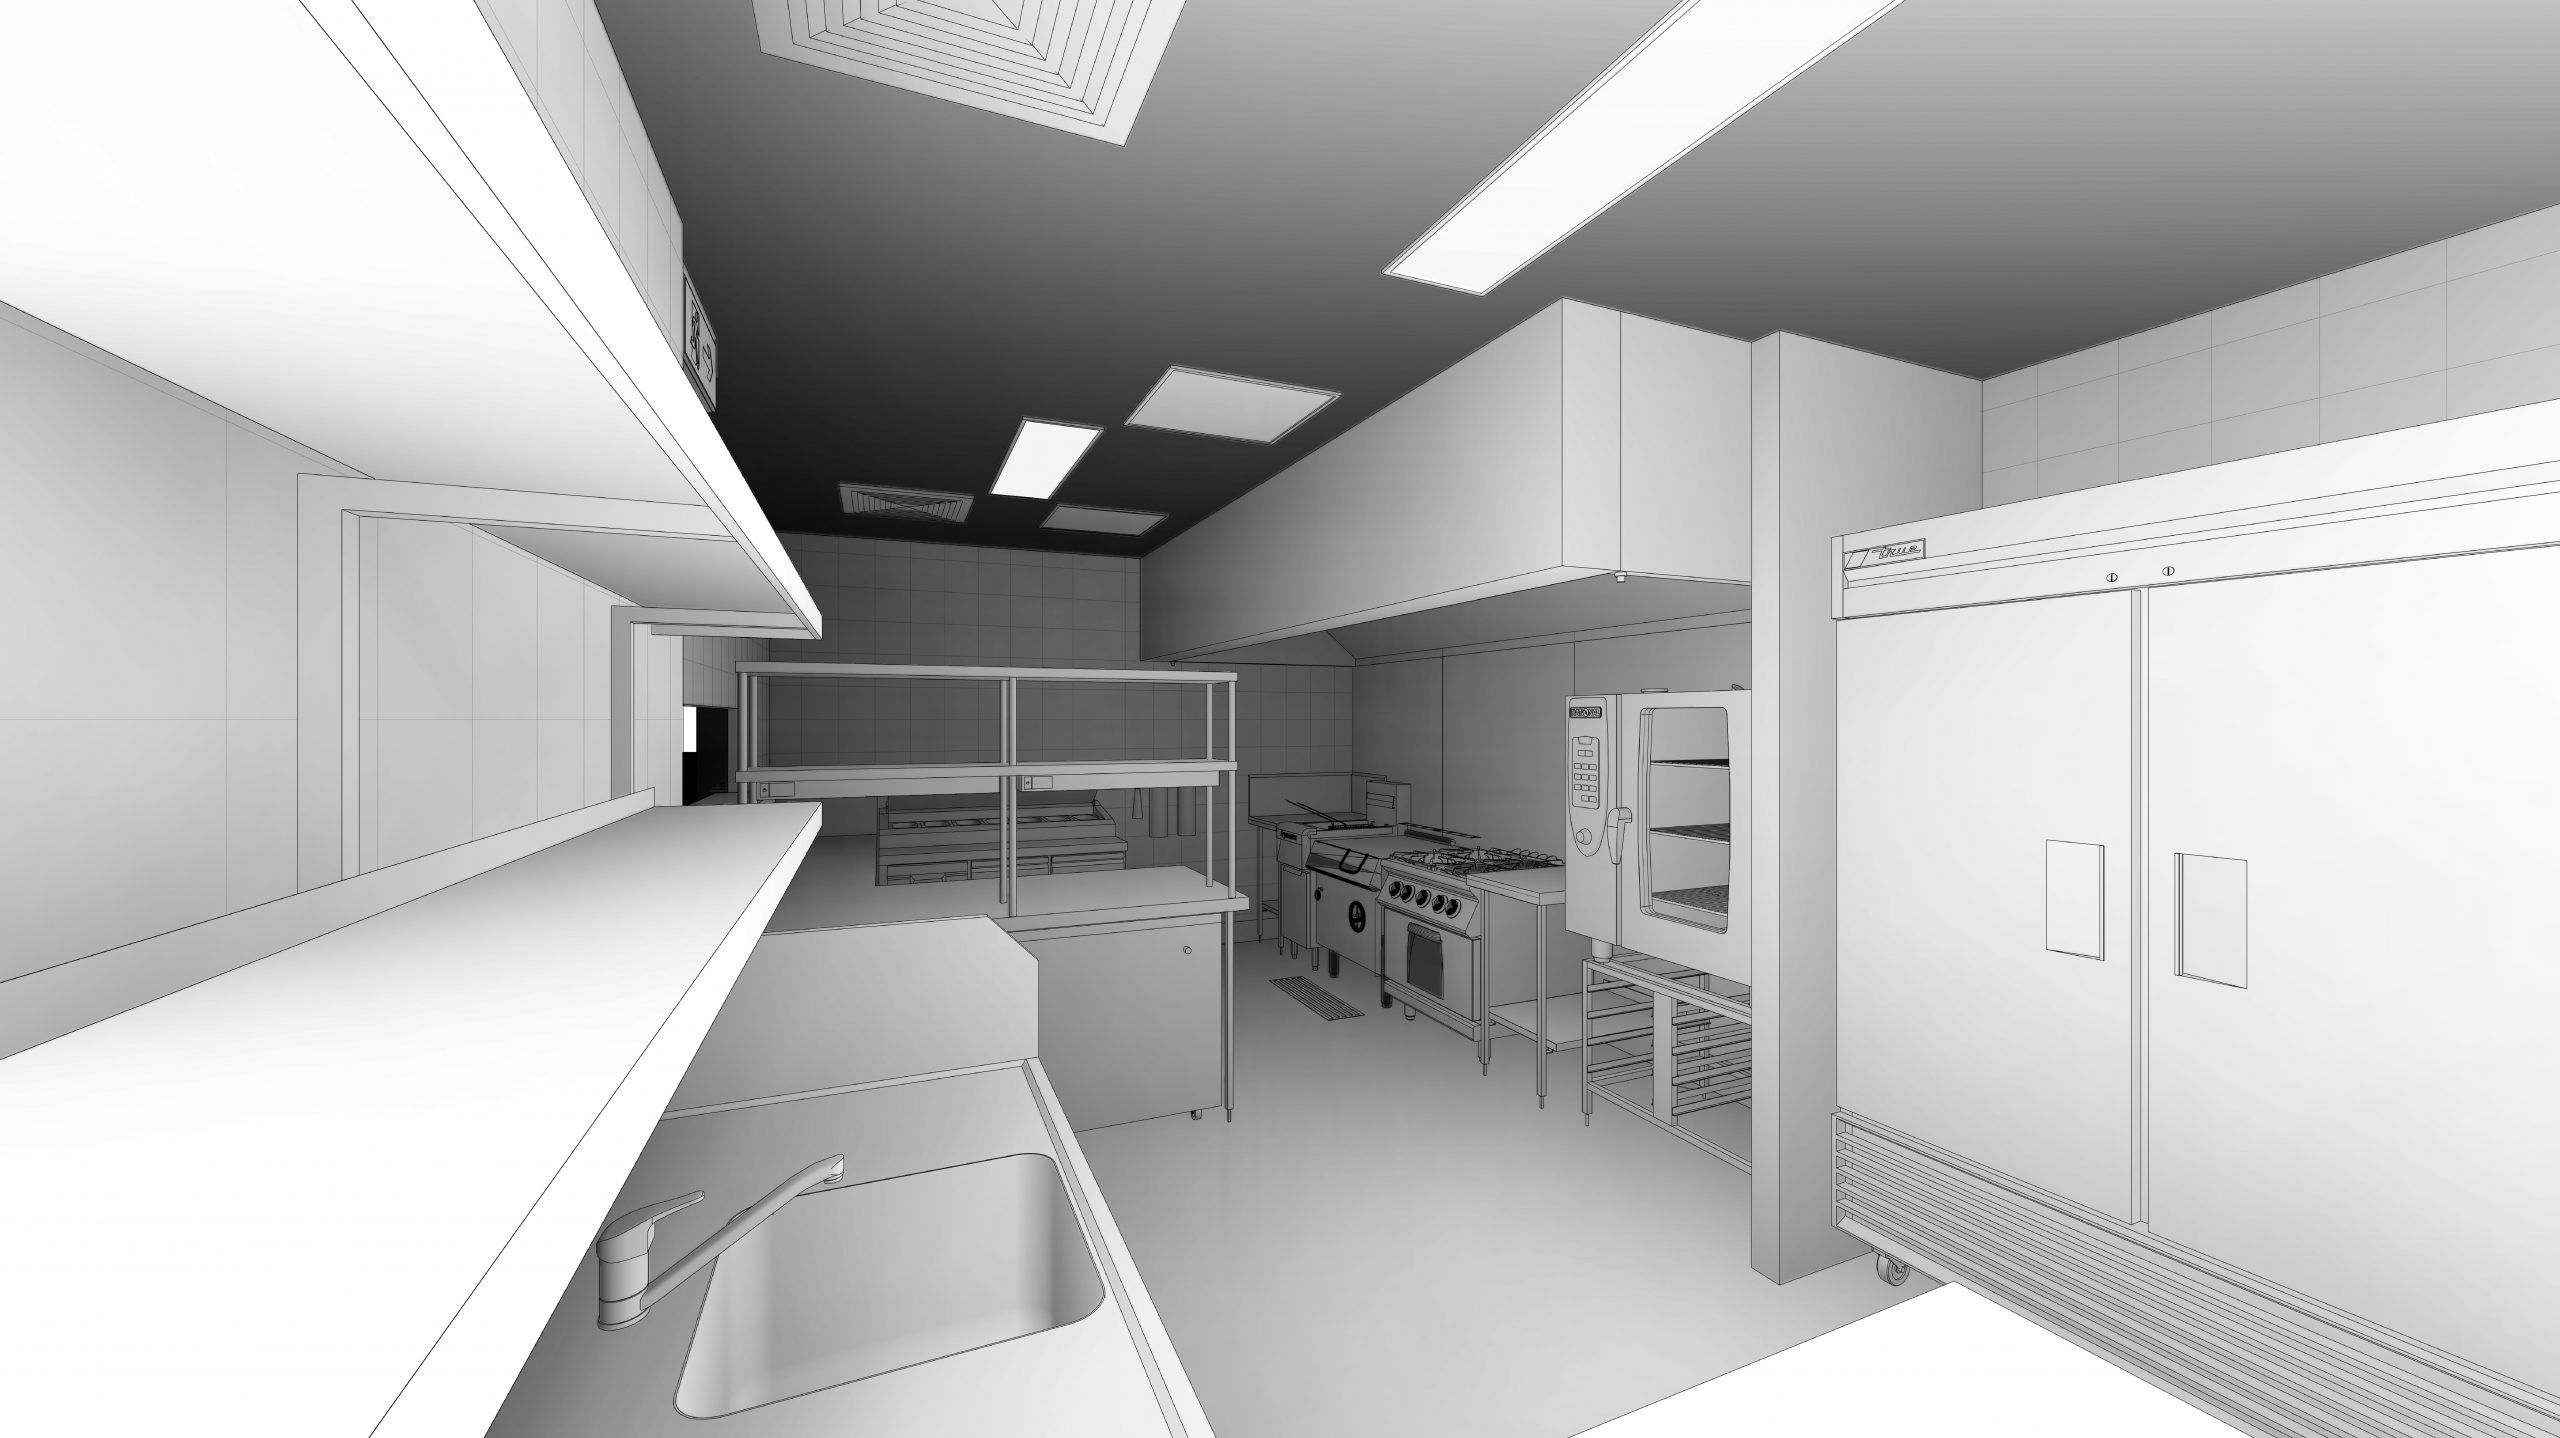 school kitchen design idea